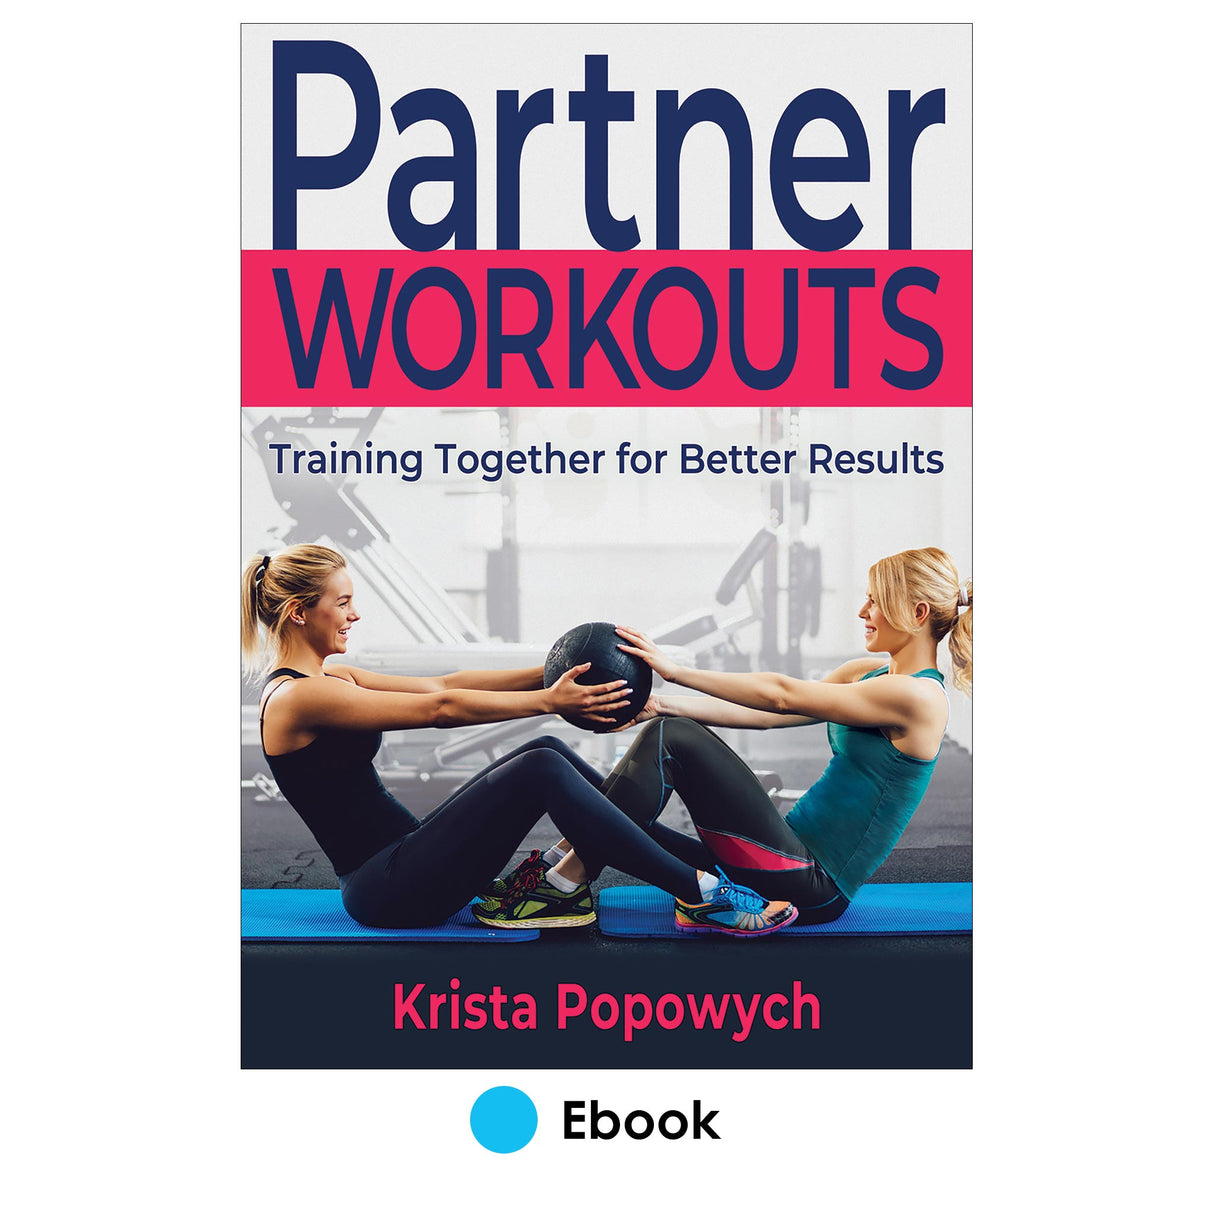 Partner Workouts epub